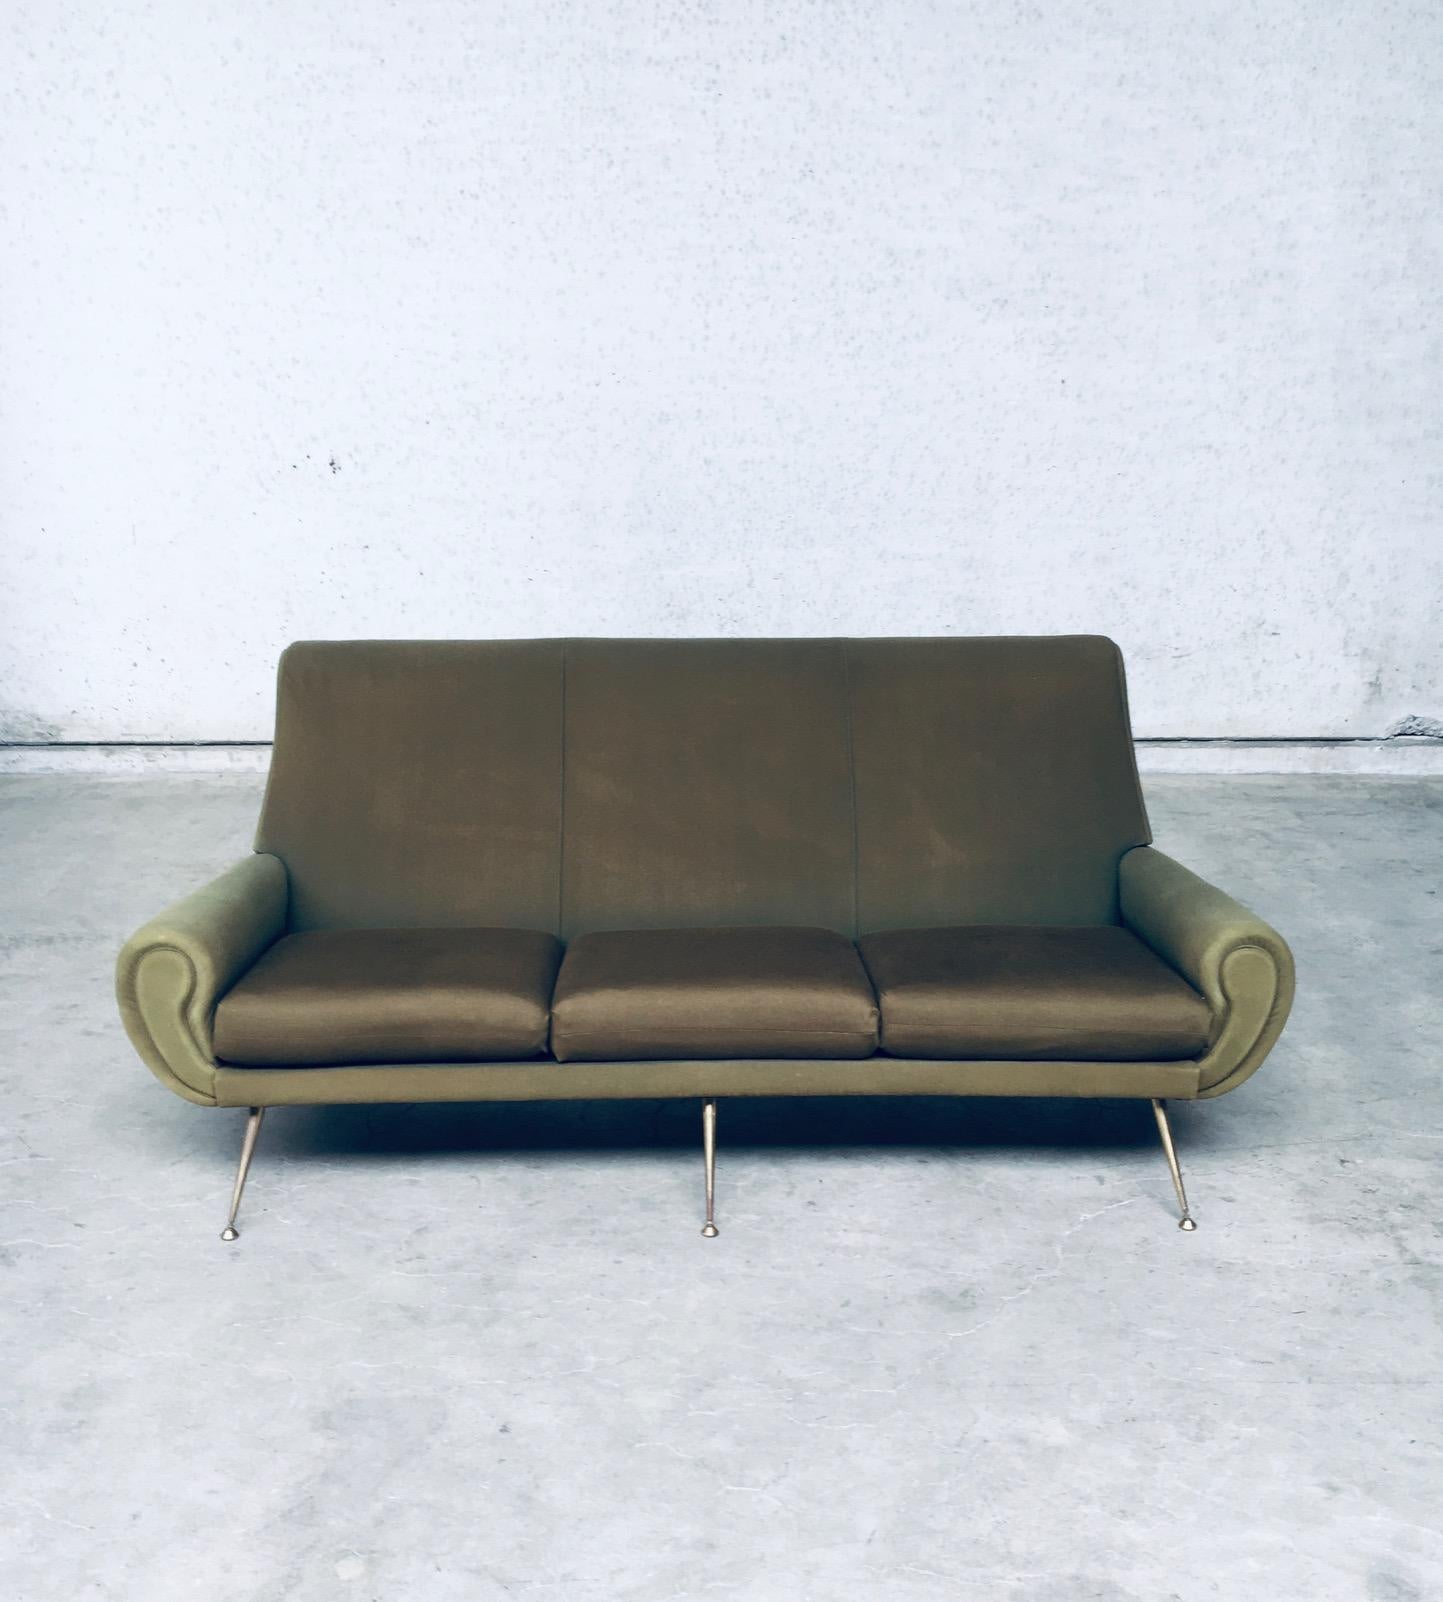 Brass Italian Design Mid-Century Modern Sofa by Gigi Radice for Minotti, Italy, 1950's